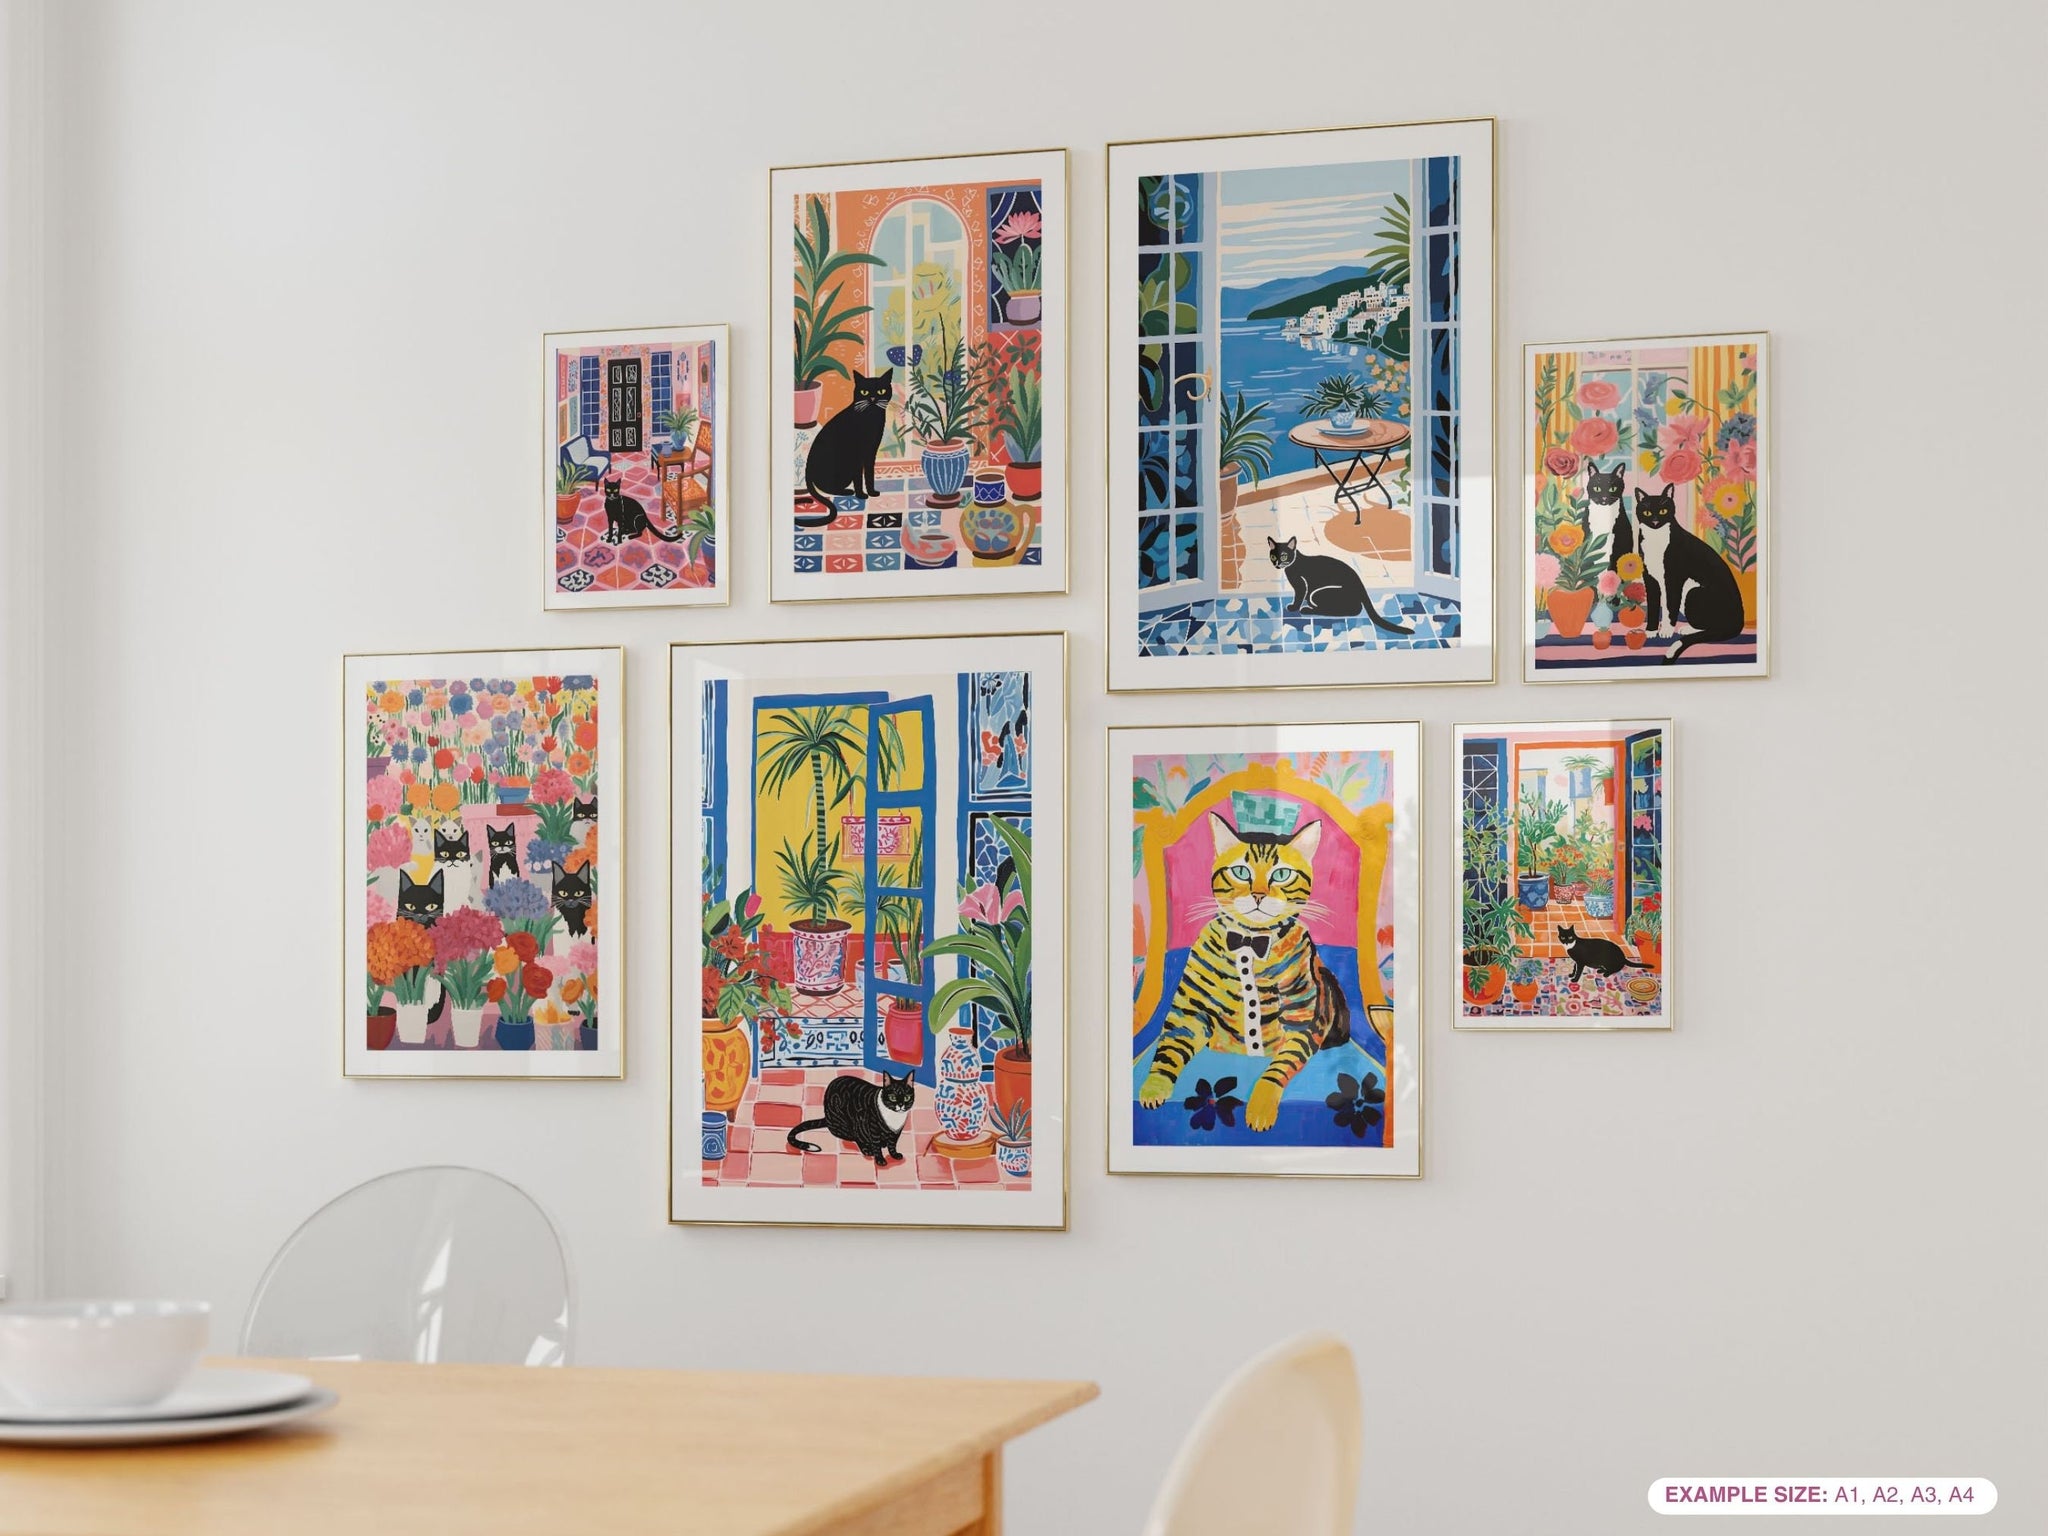 Black Cat Print, Botanical Wall Art, Pink and Orange Wall Art, Cat Illustration, Cat Poster, Cat Wall Art, Animal Wall Art, Boho Botanical